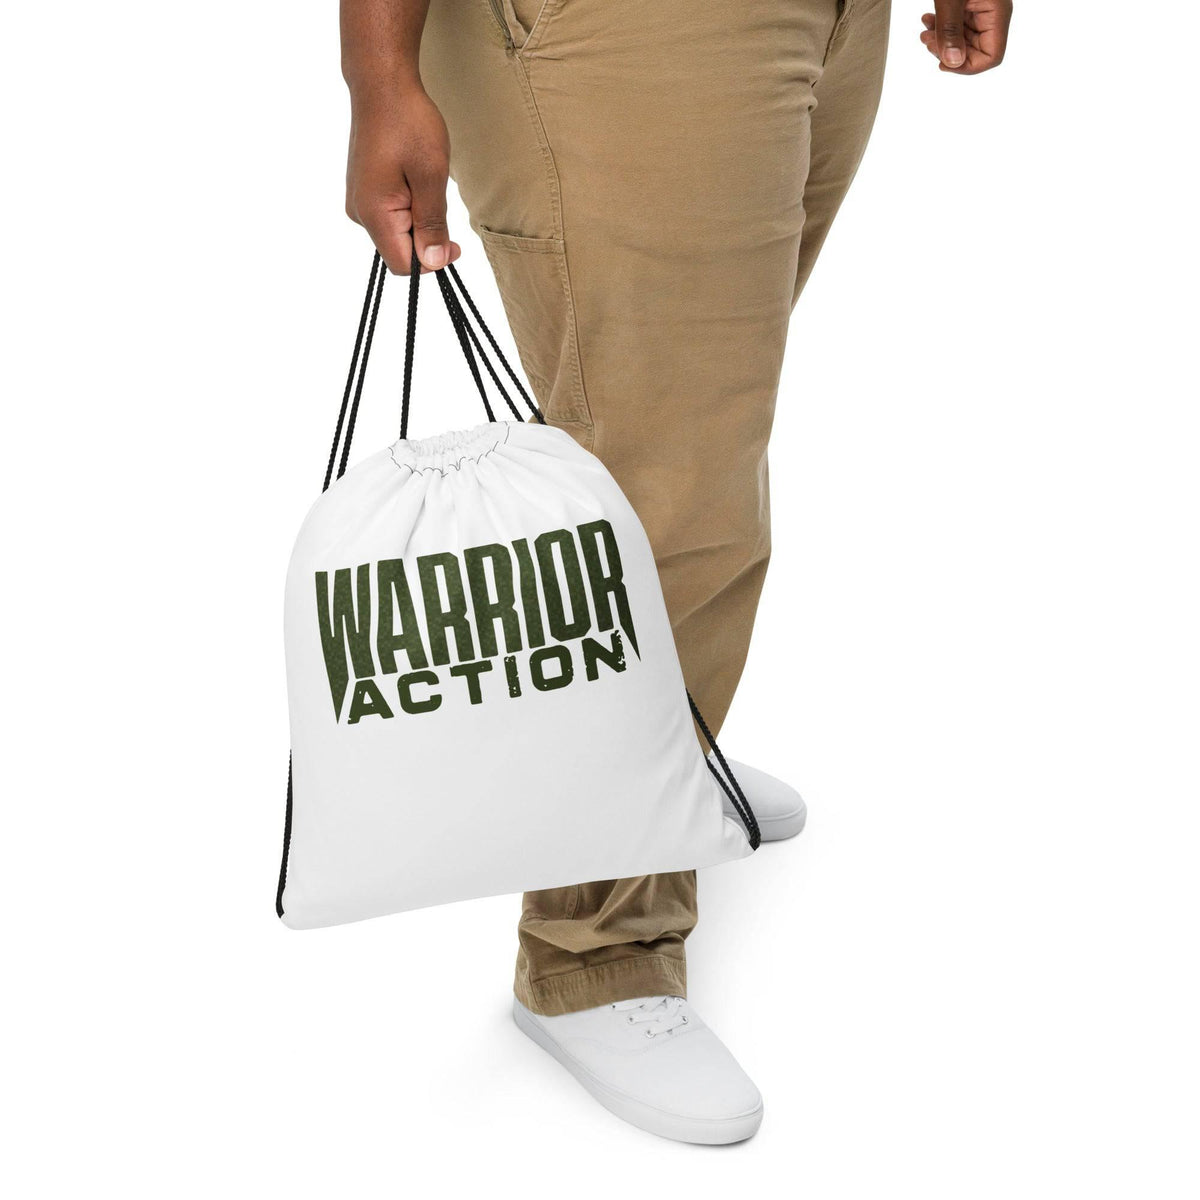 Warrior Action Drawstring bag - Warrior Action